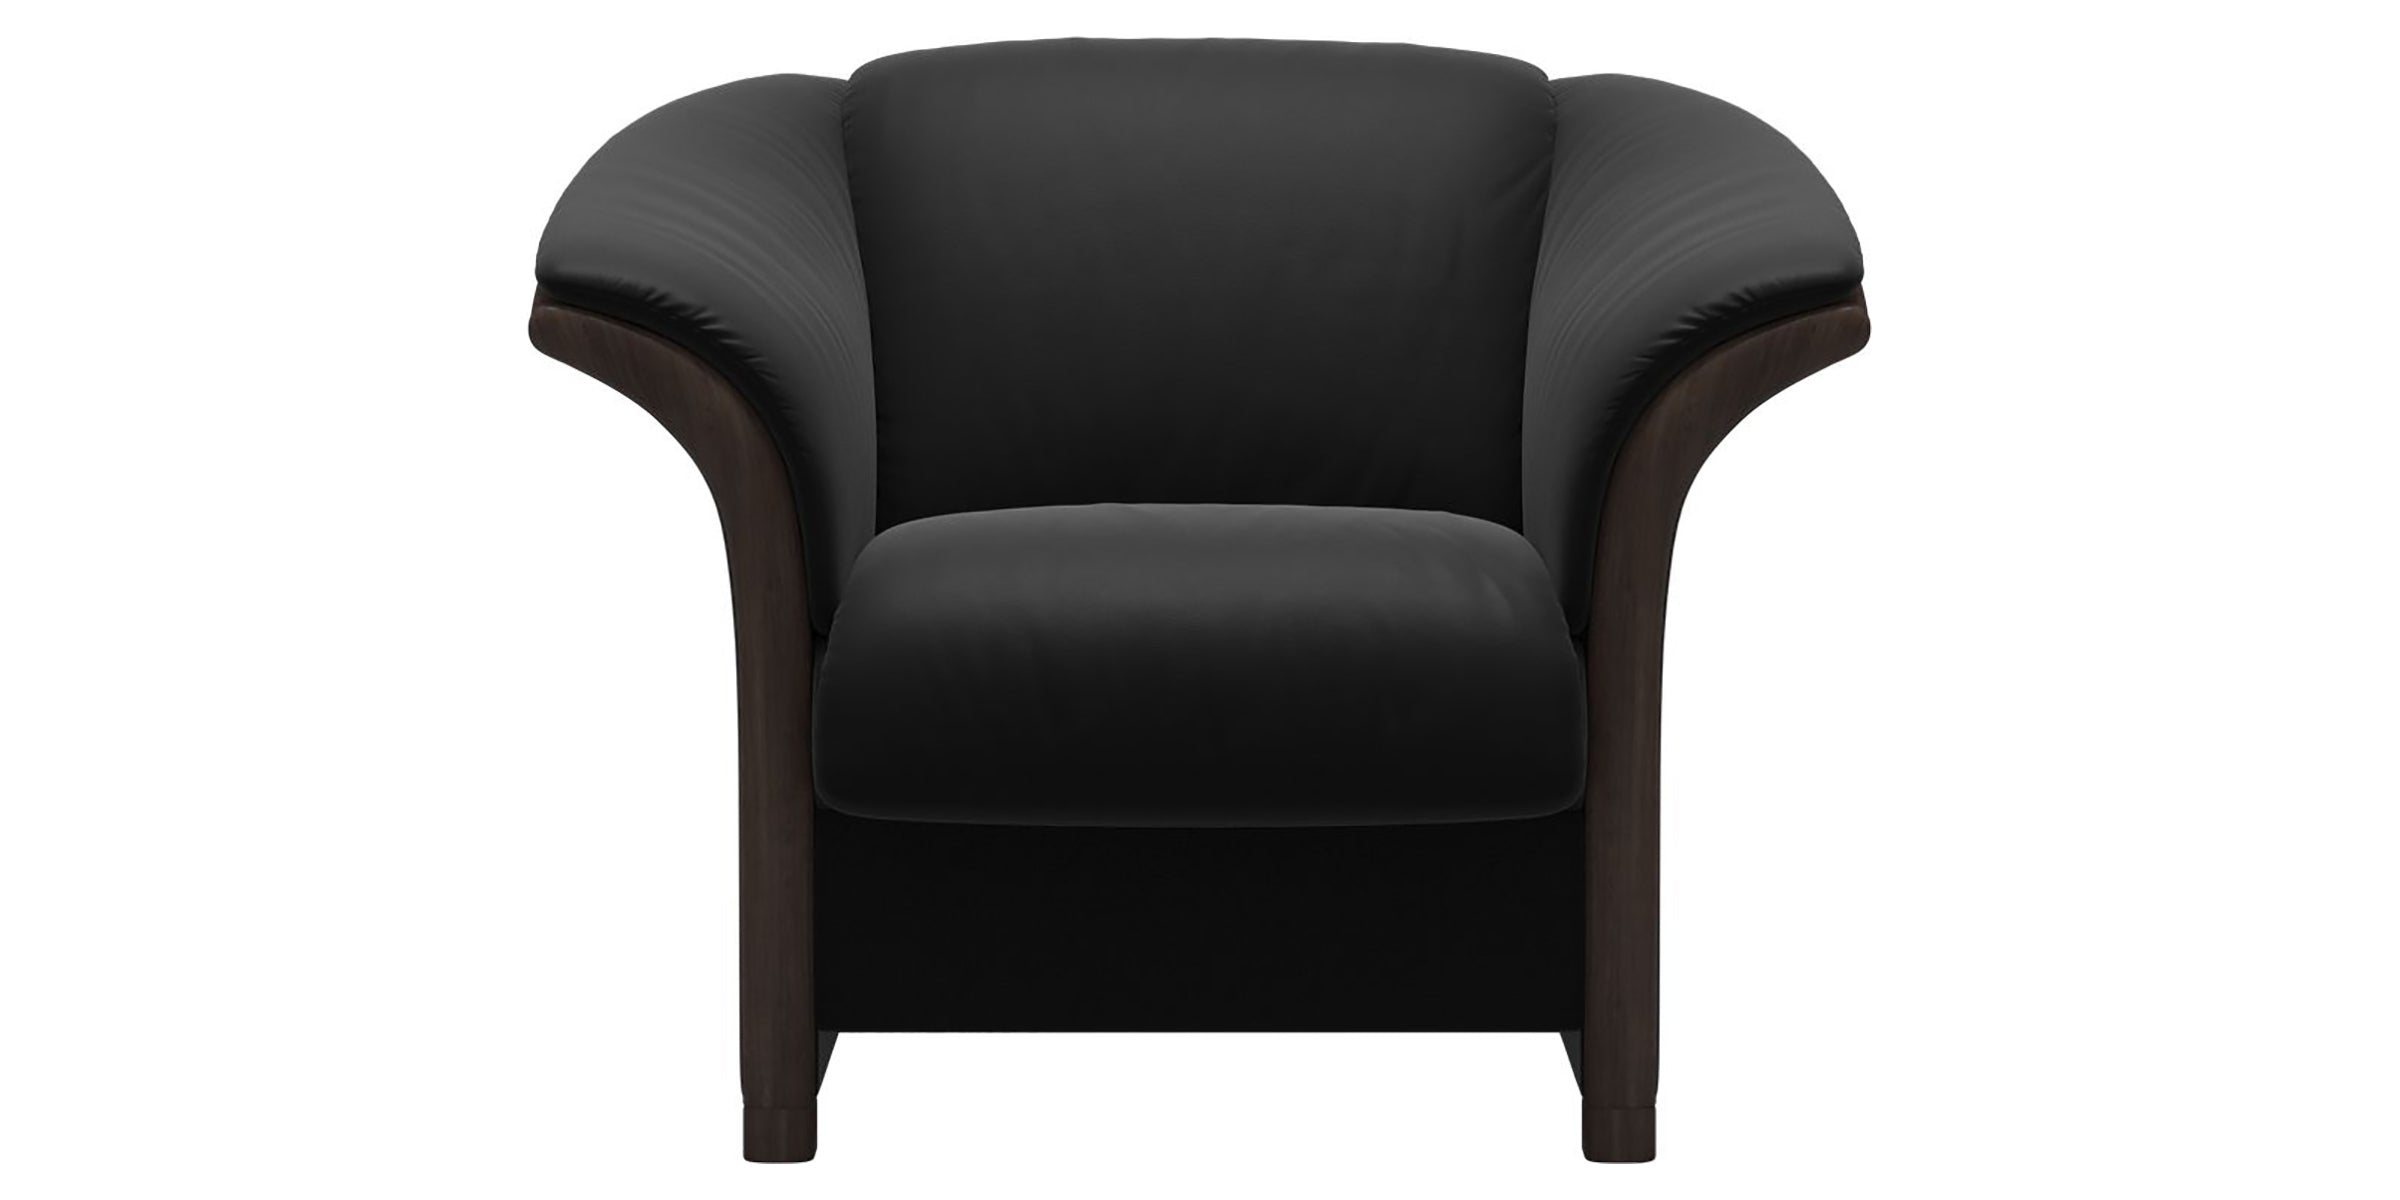 Paloma Leather Black and Wenge Arm Trim | Stressless Manhattan Chair | Valley Ridge Furniture